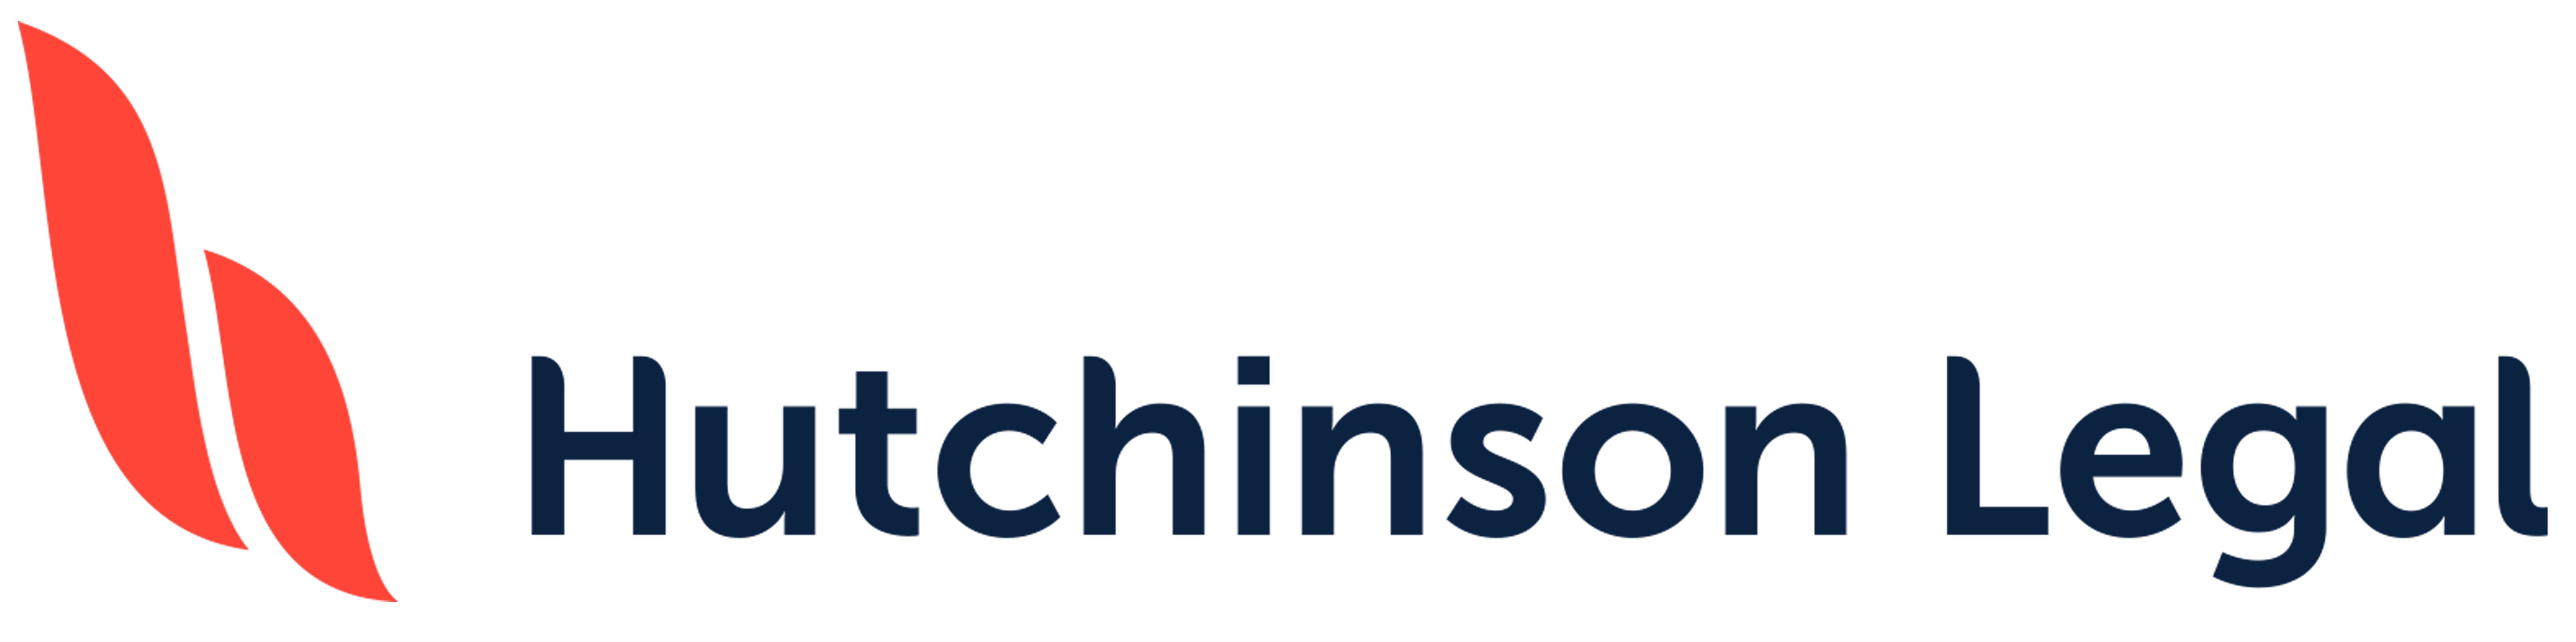 Hutchinson Legal logo